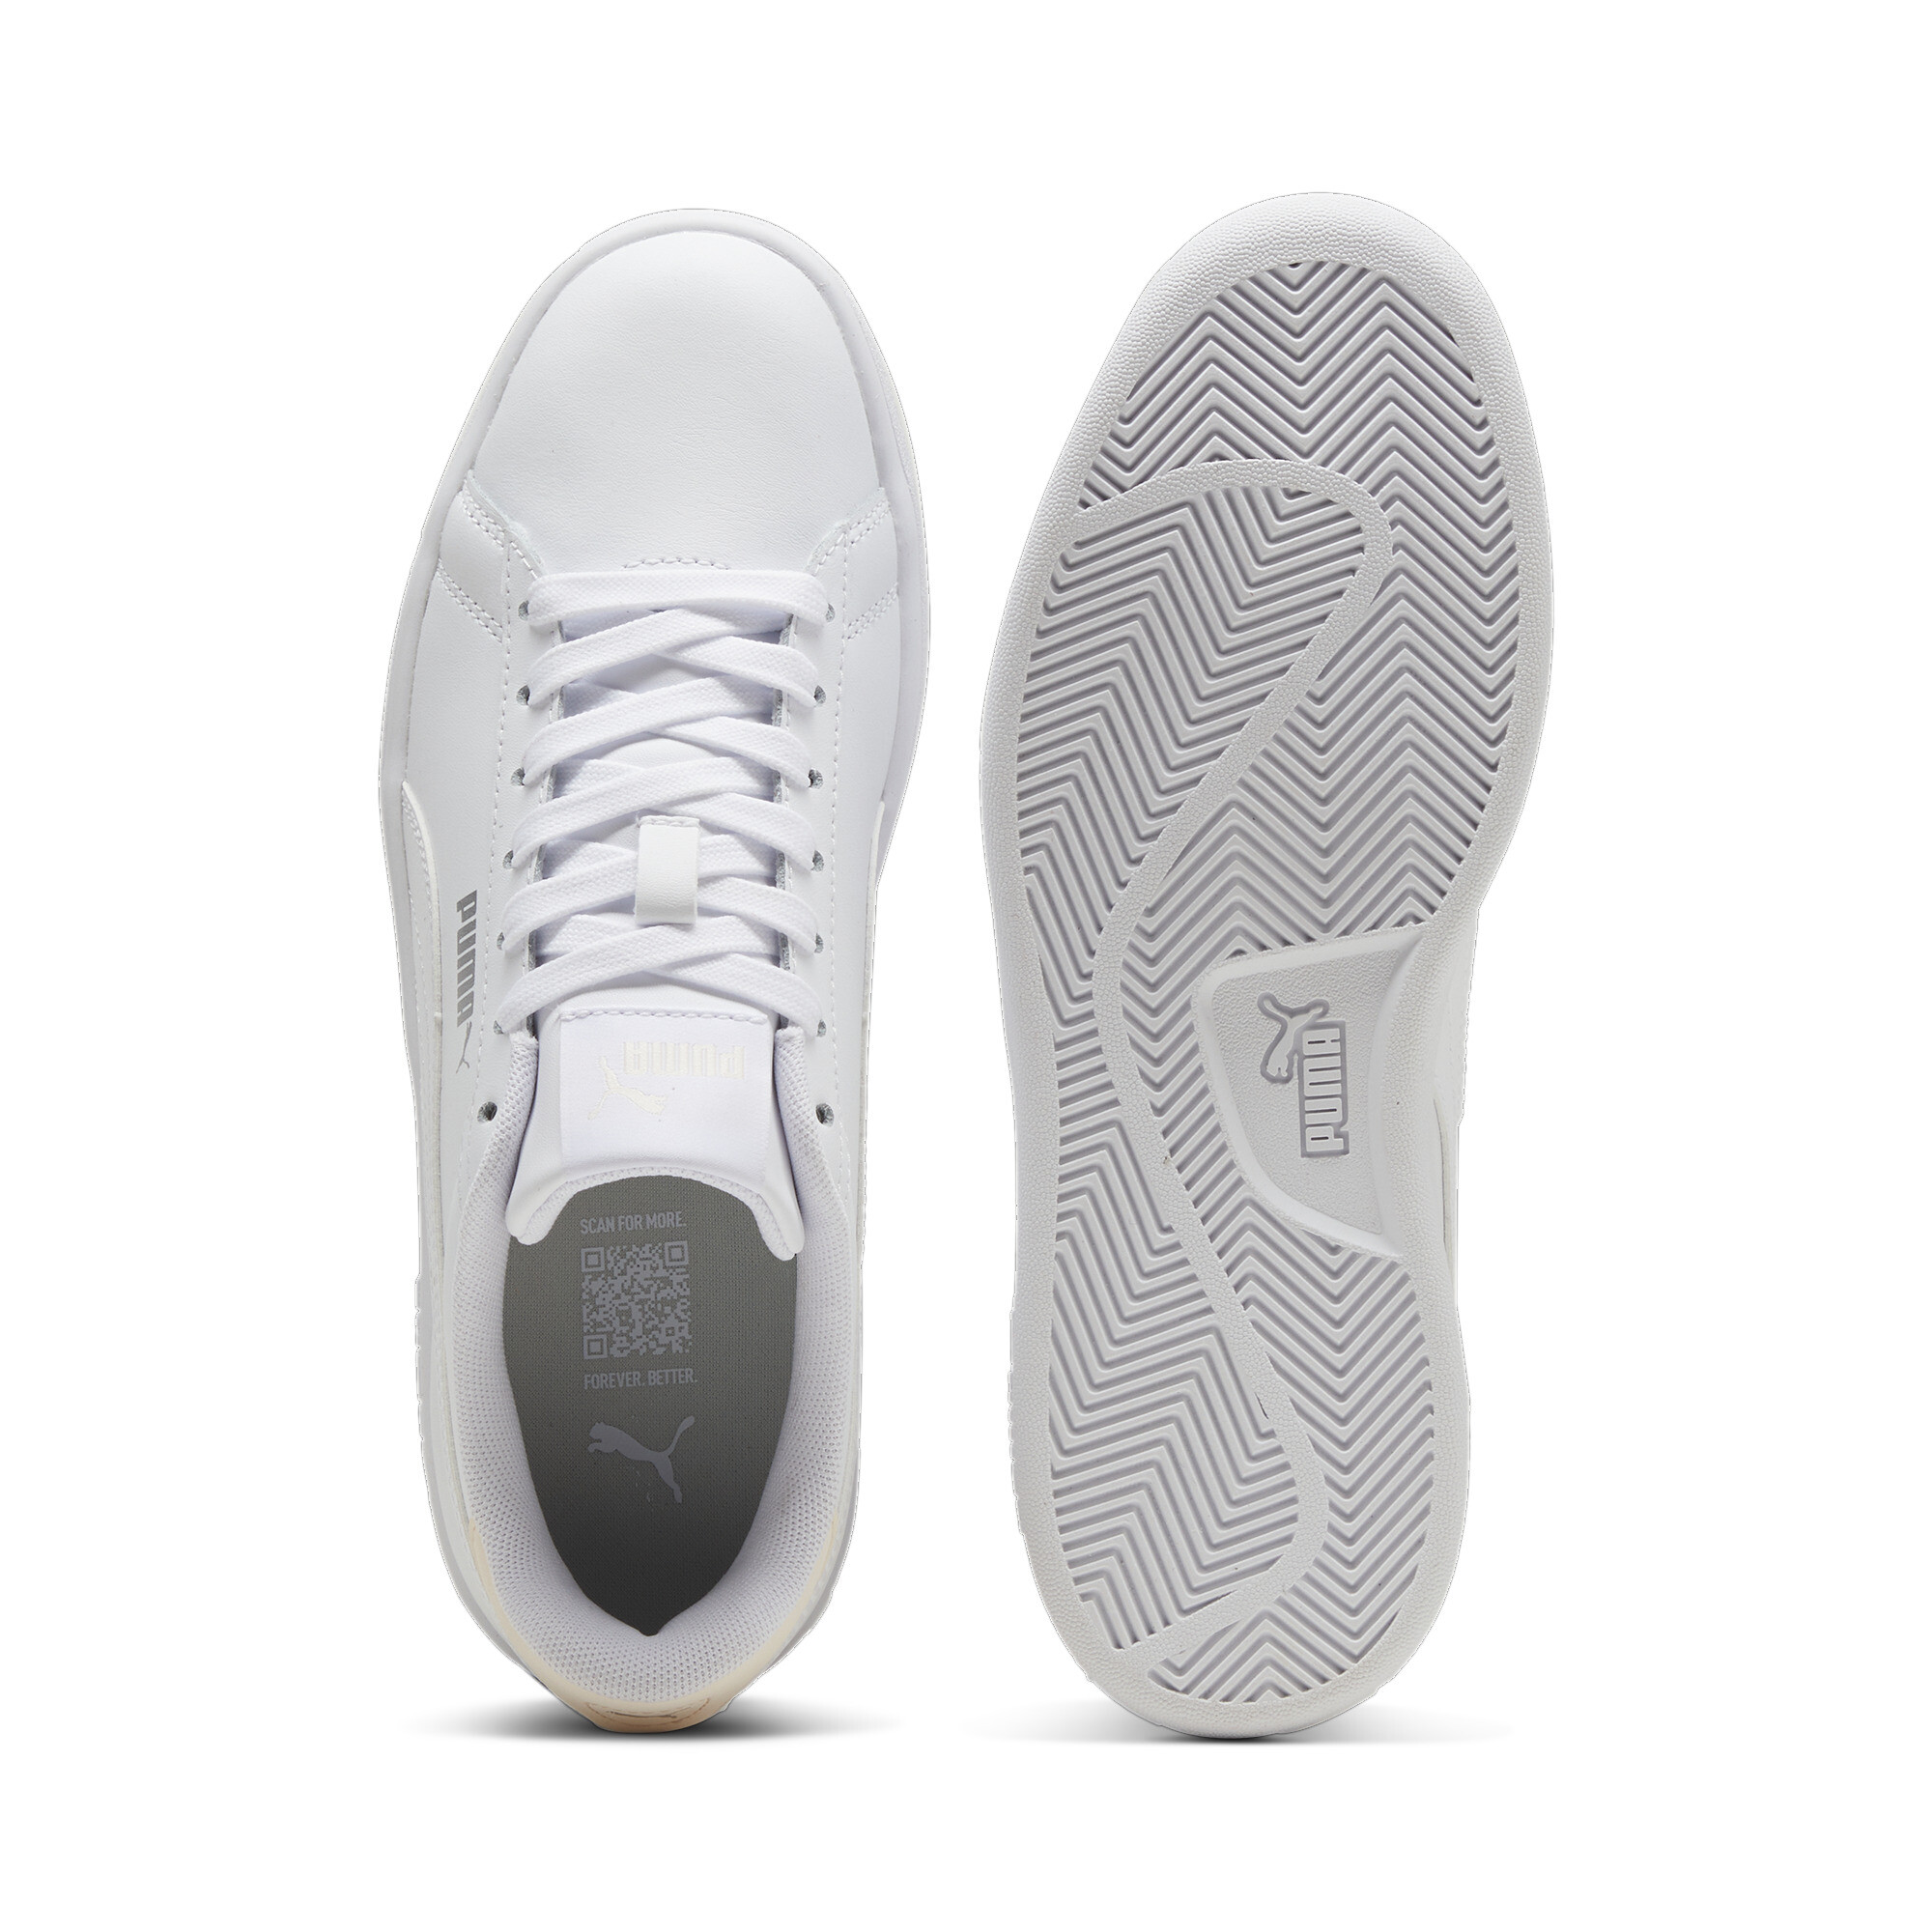 Puma Smash 3.0 L Sneakers, White, Size 45, Shoes